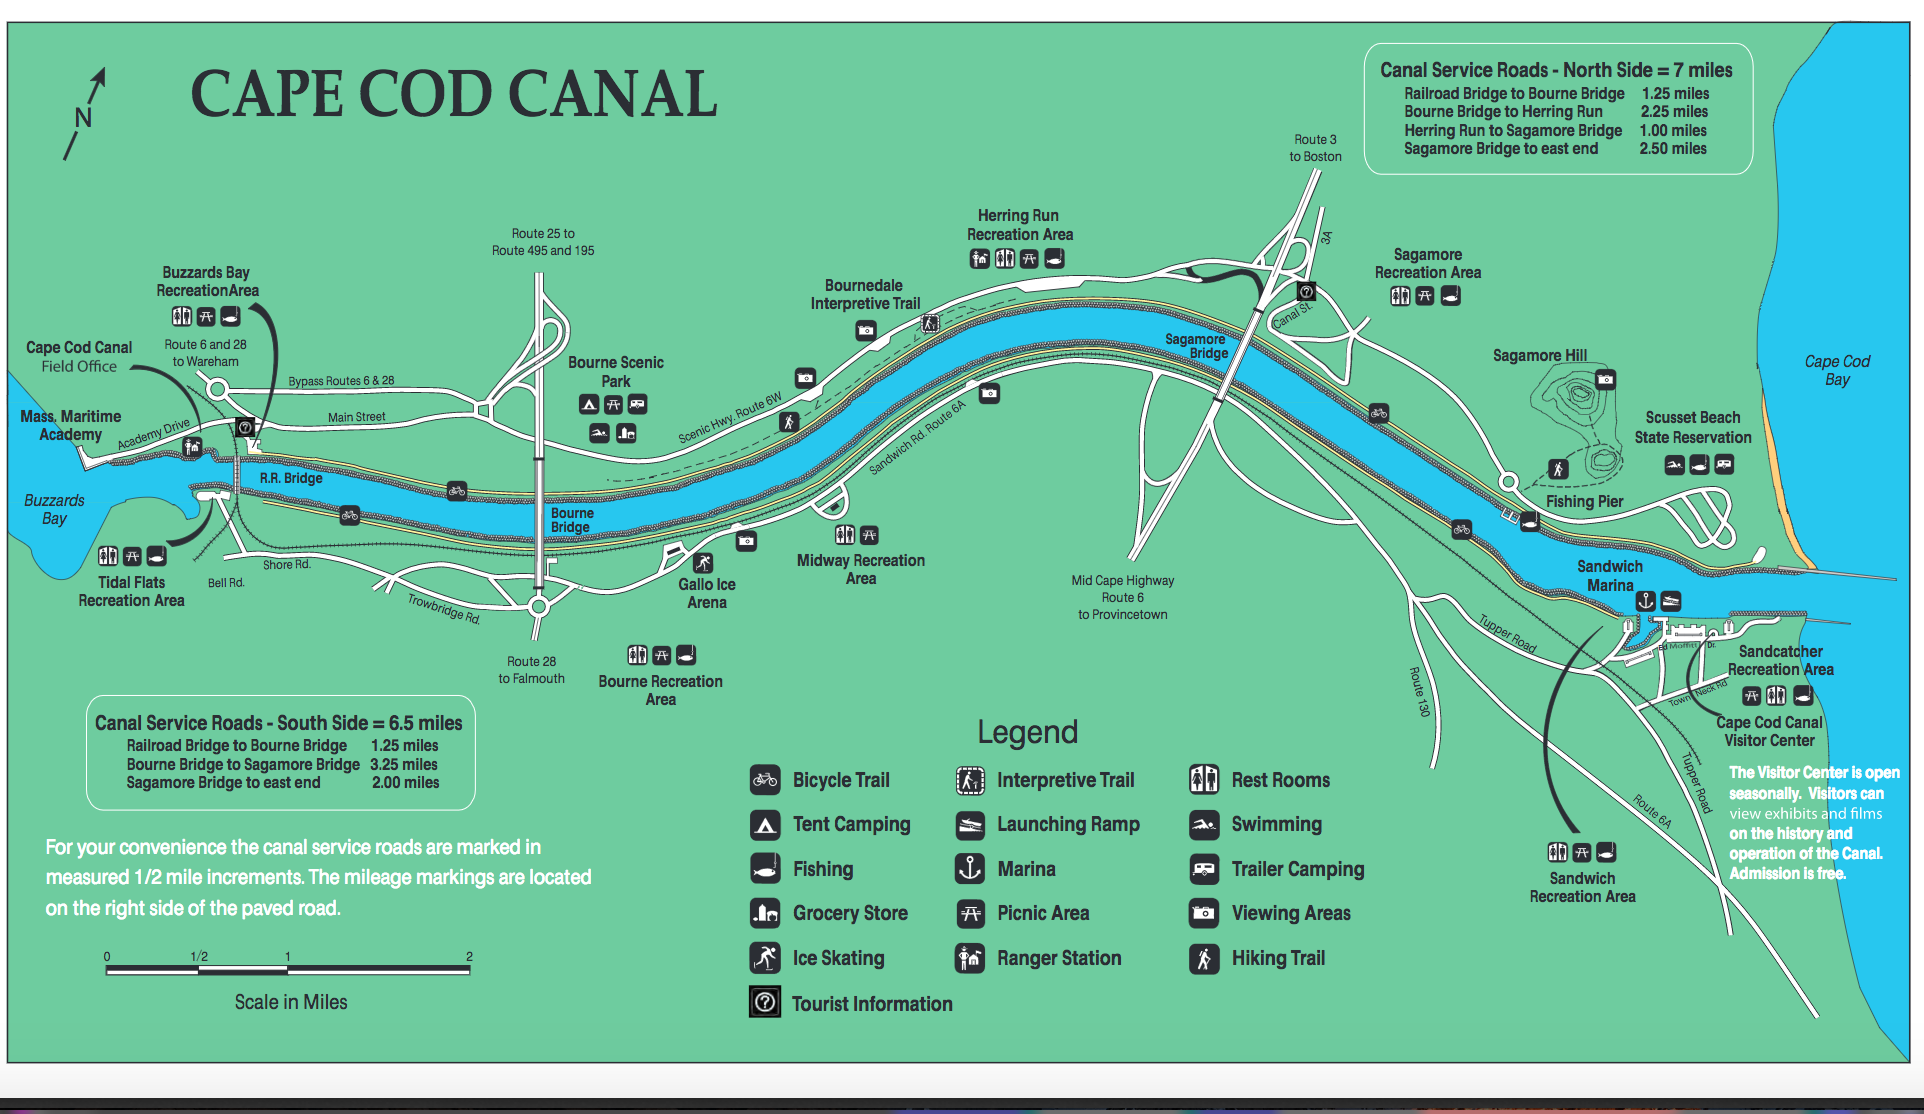 Cape cod canal photo